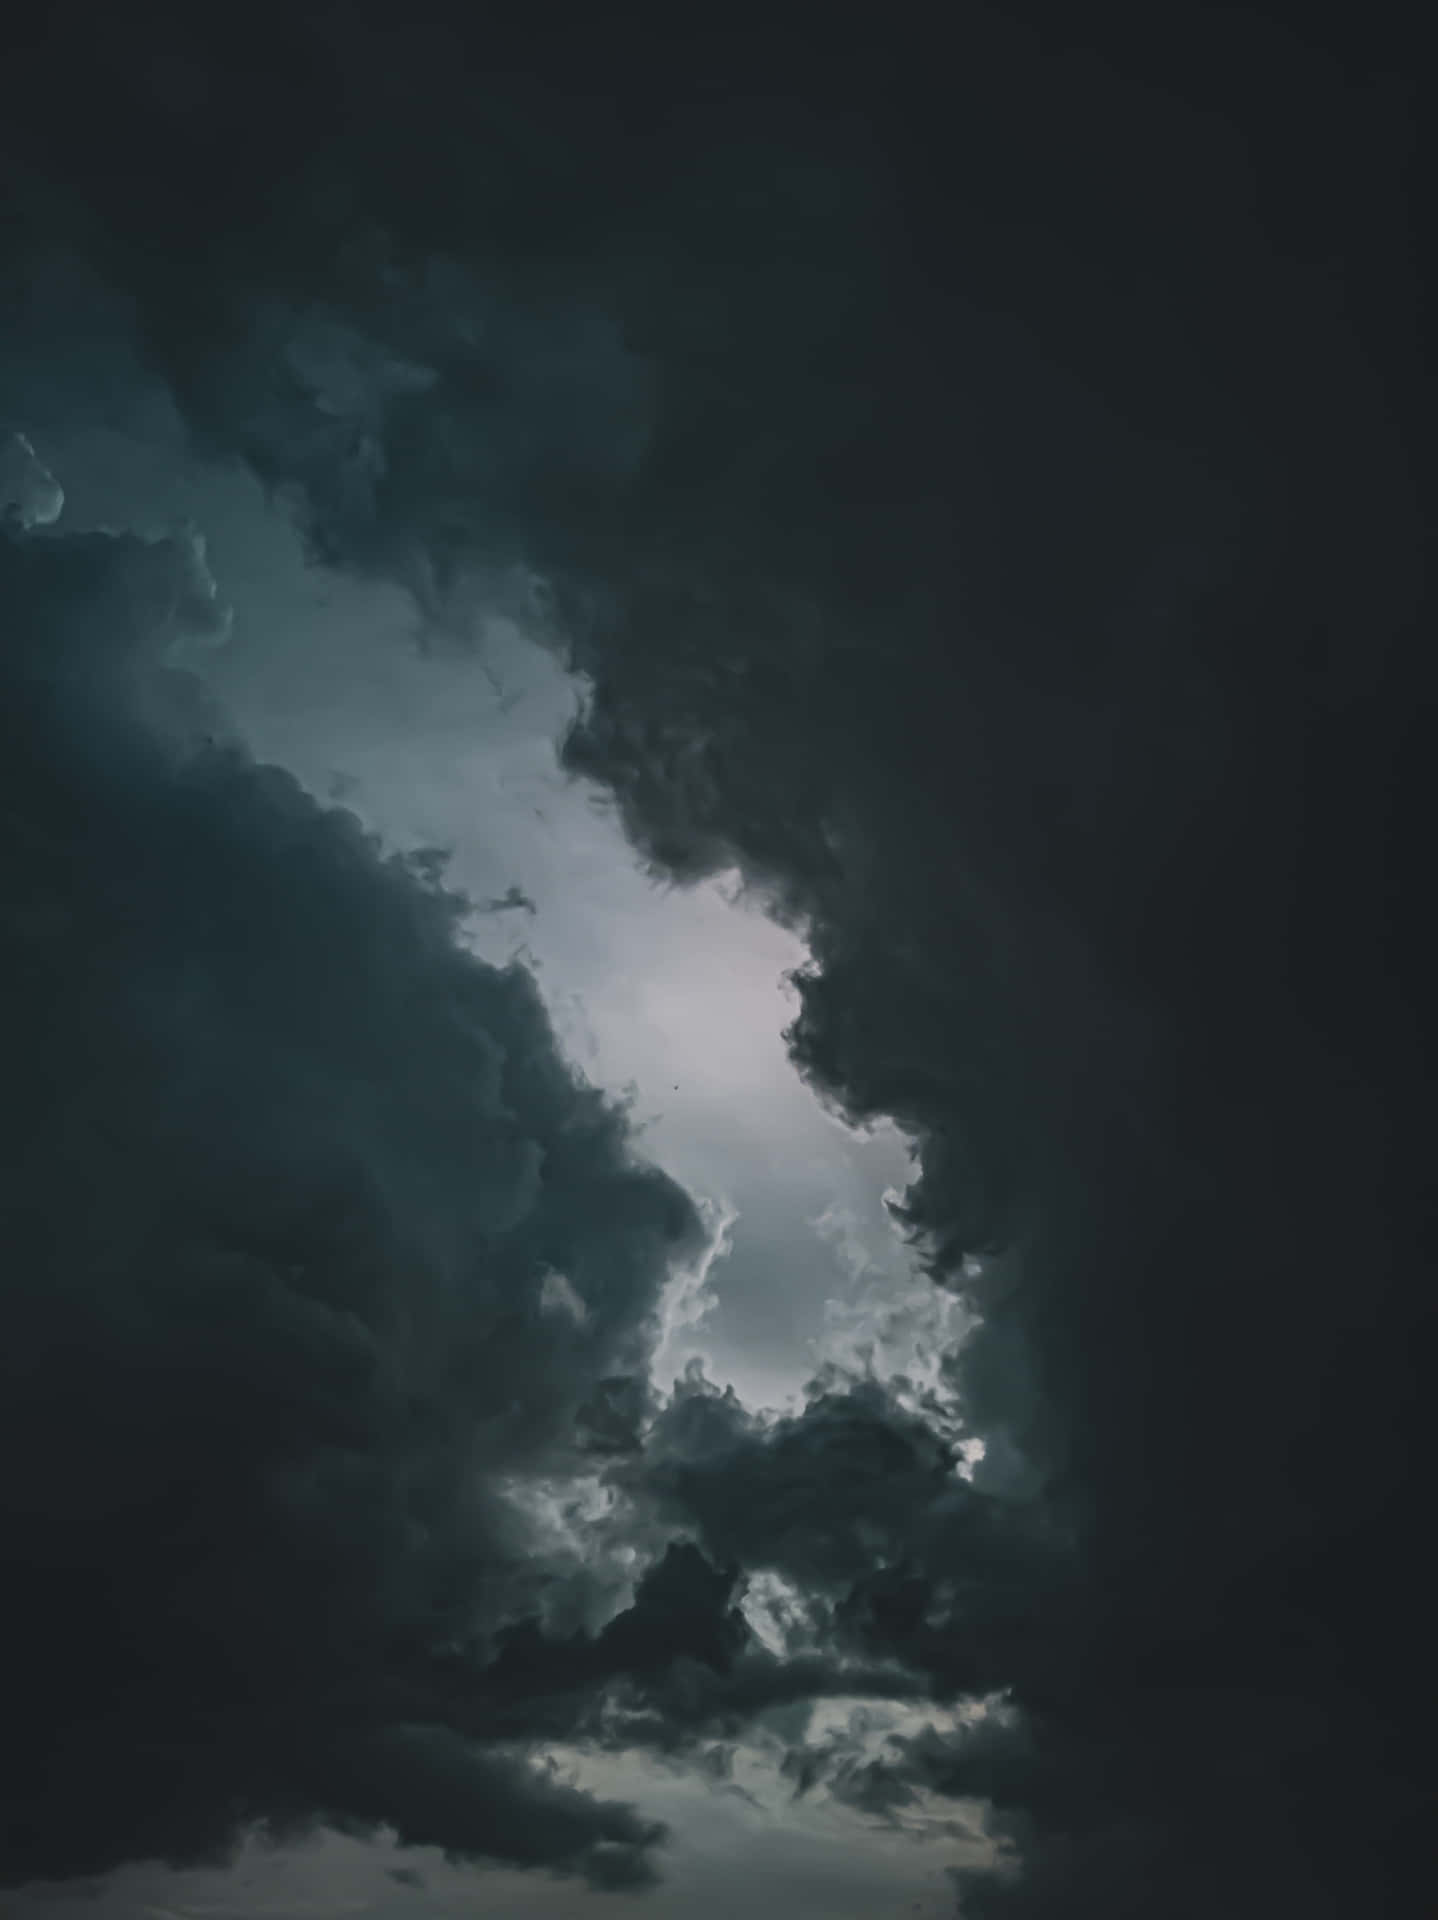 A dark and cloudy sky overhead creates a mysterious atmosphere